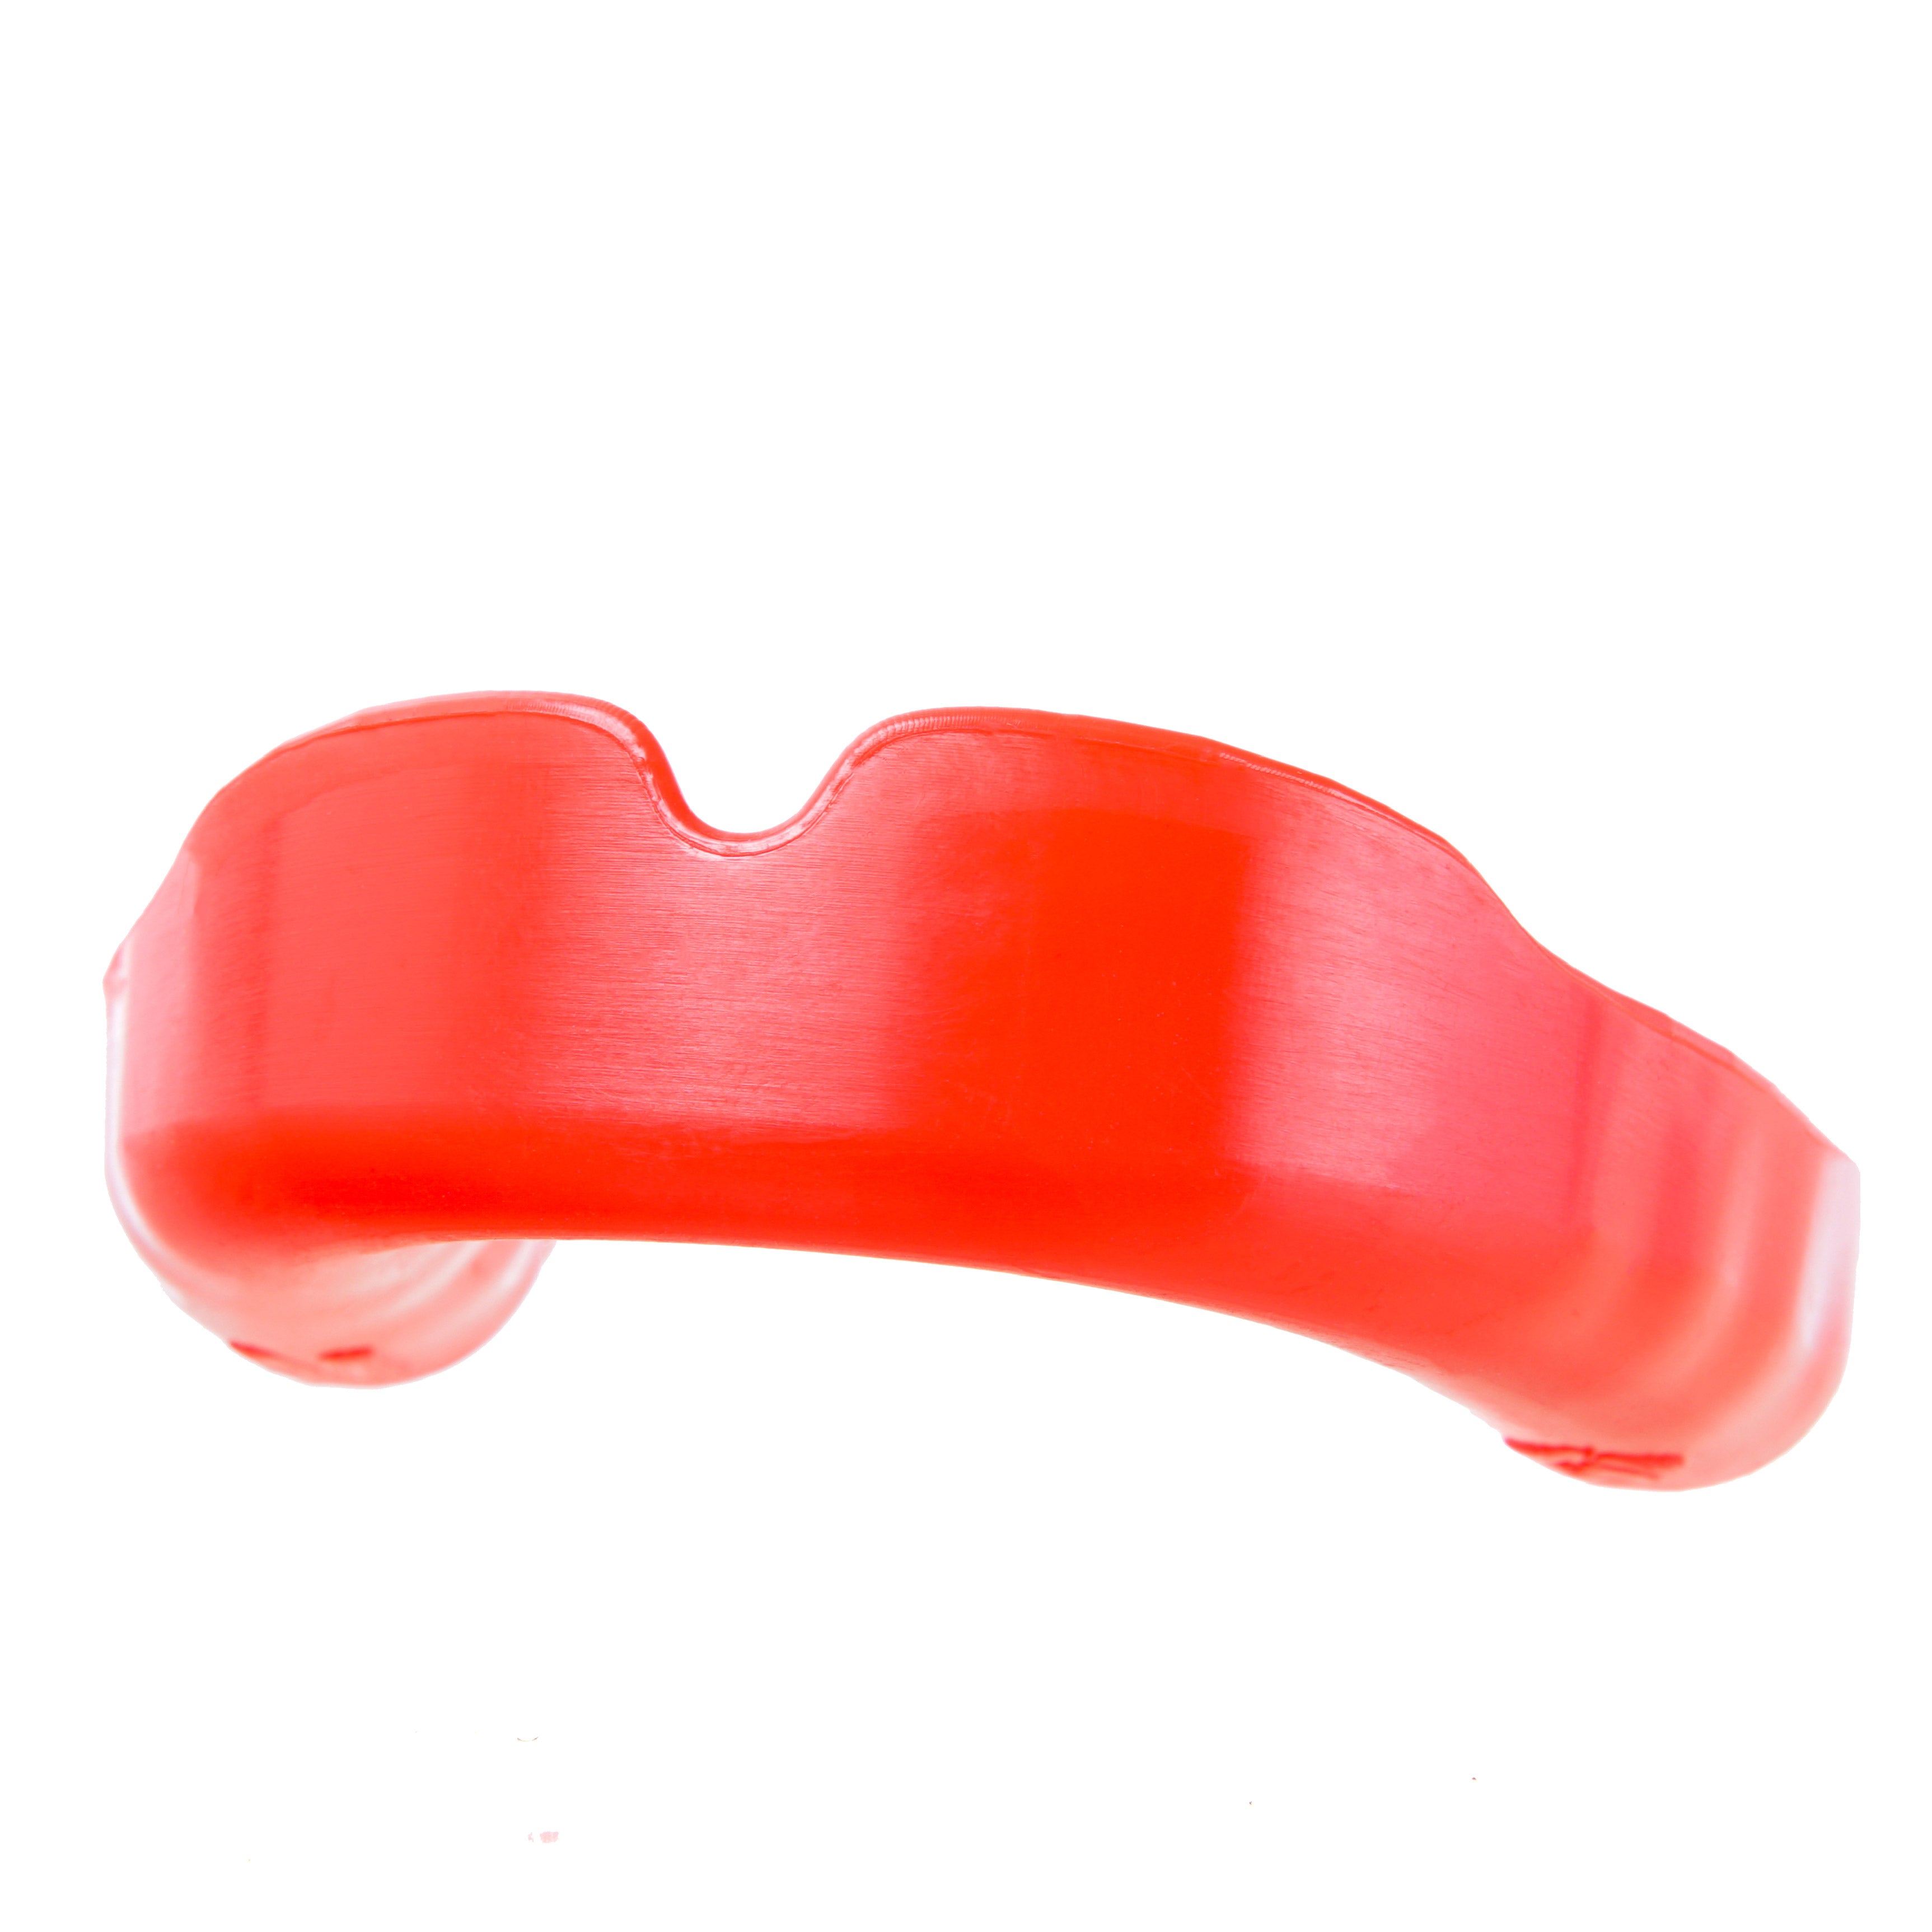 APEX LITE Red mouthguard